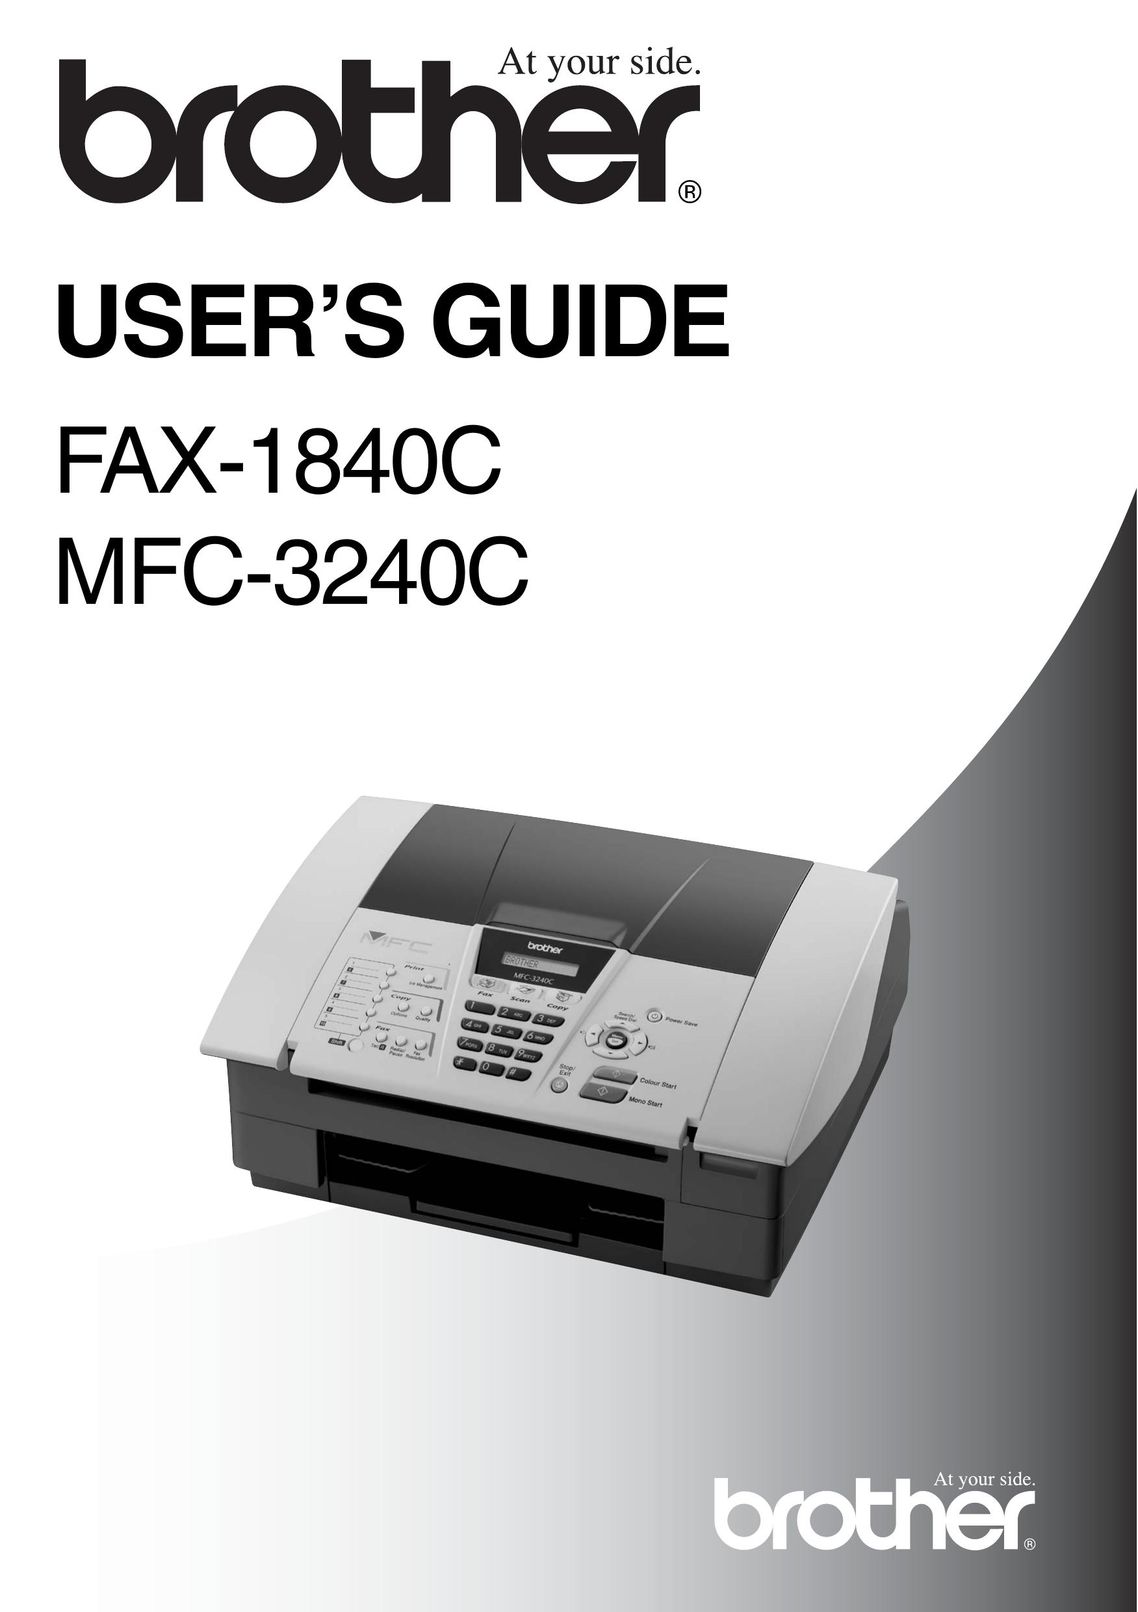 Brother 1840C Fax Machine User Manual